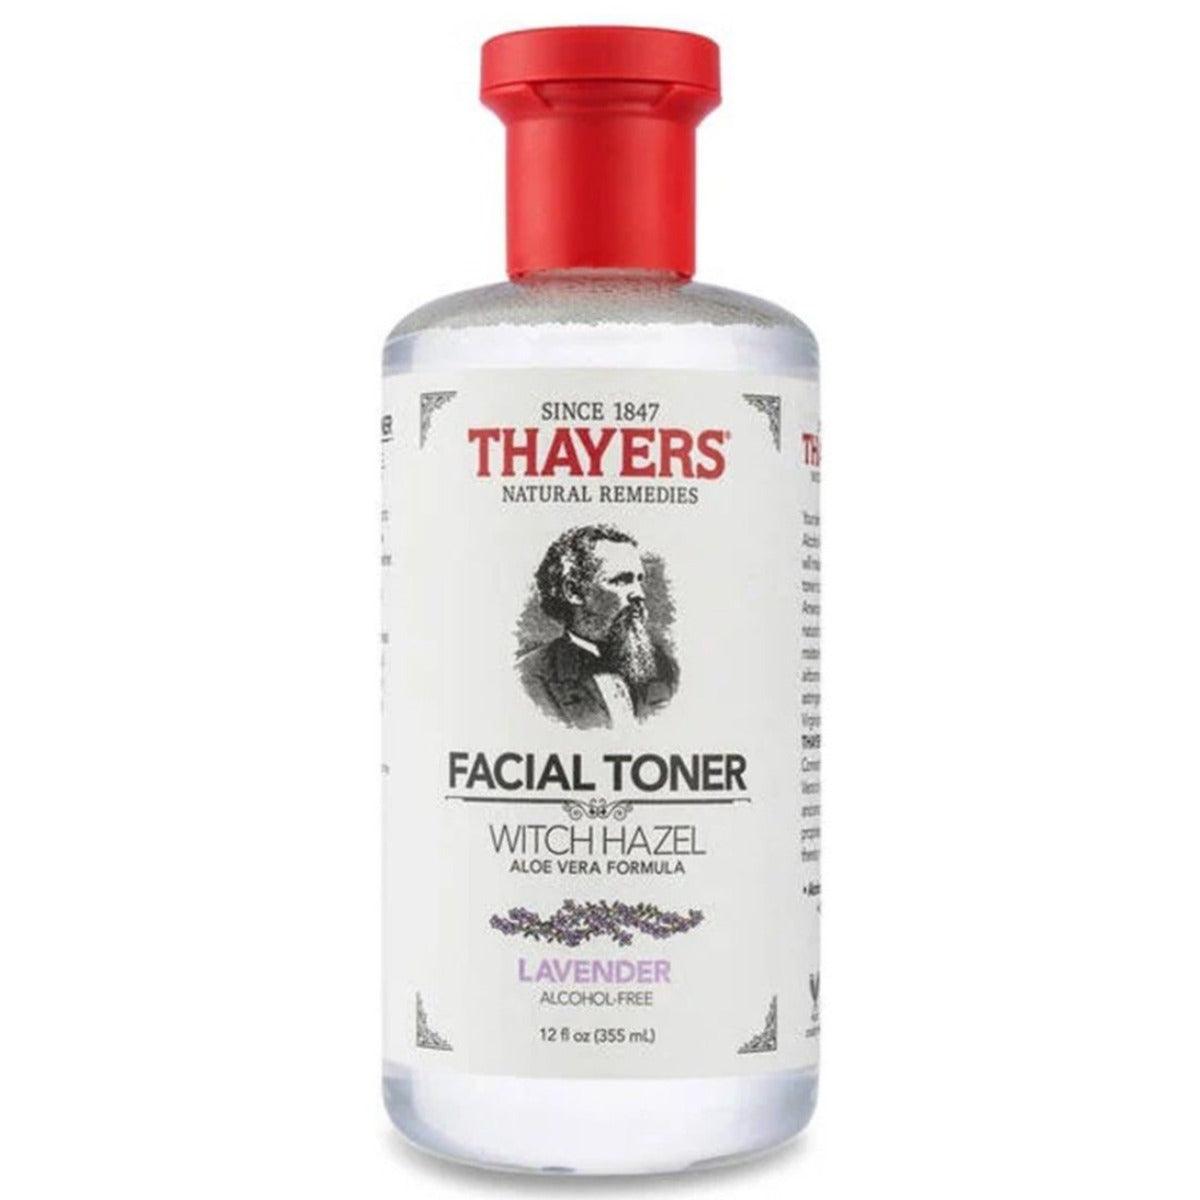 Thayers Witch Hazel Facial Toner Lavender Alcohol Free 355mL Face Toner at Village Vitamin Store